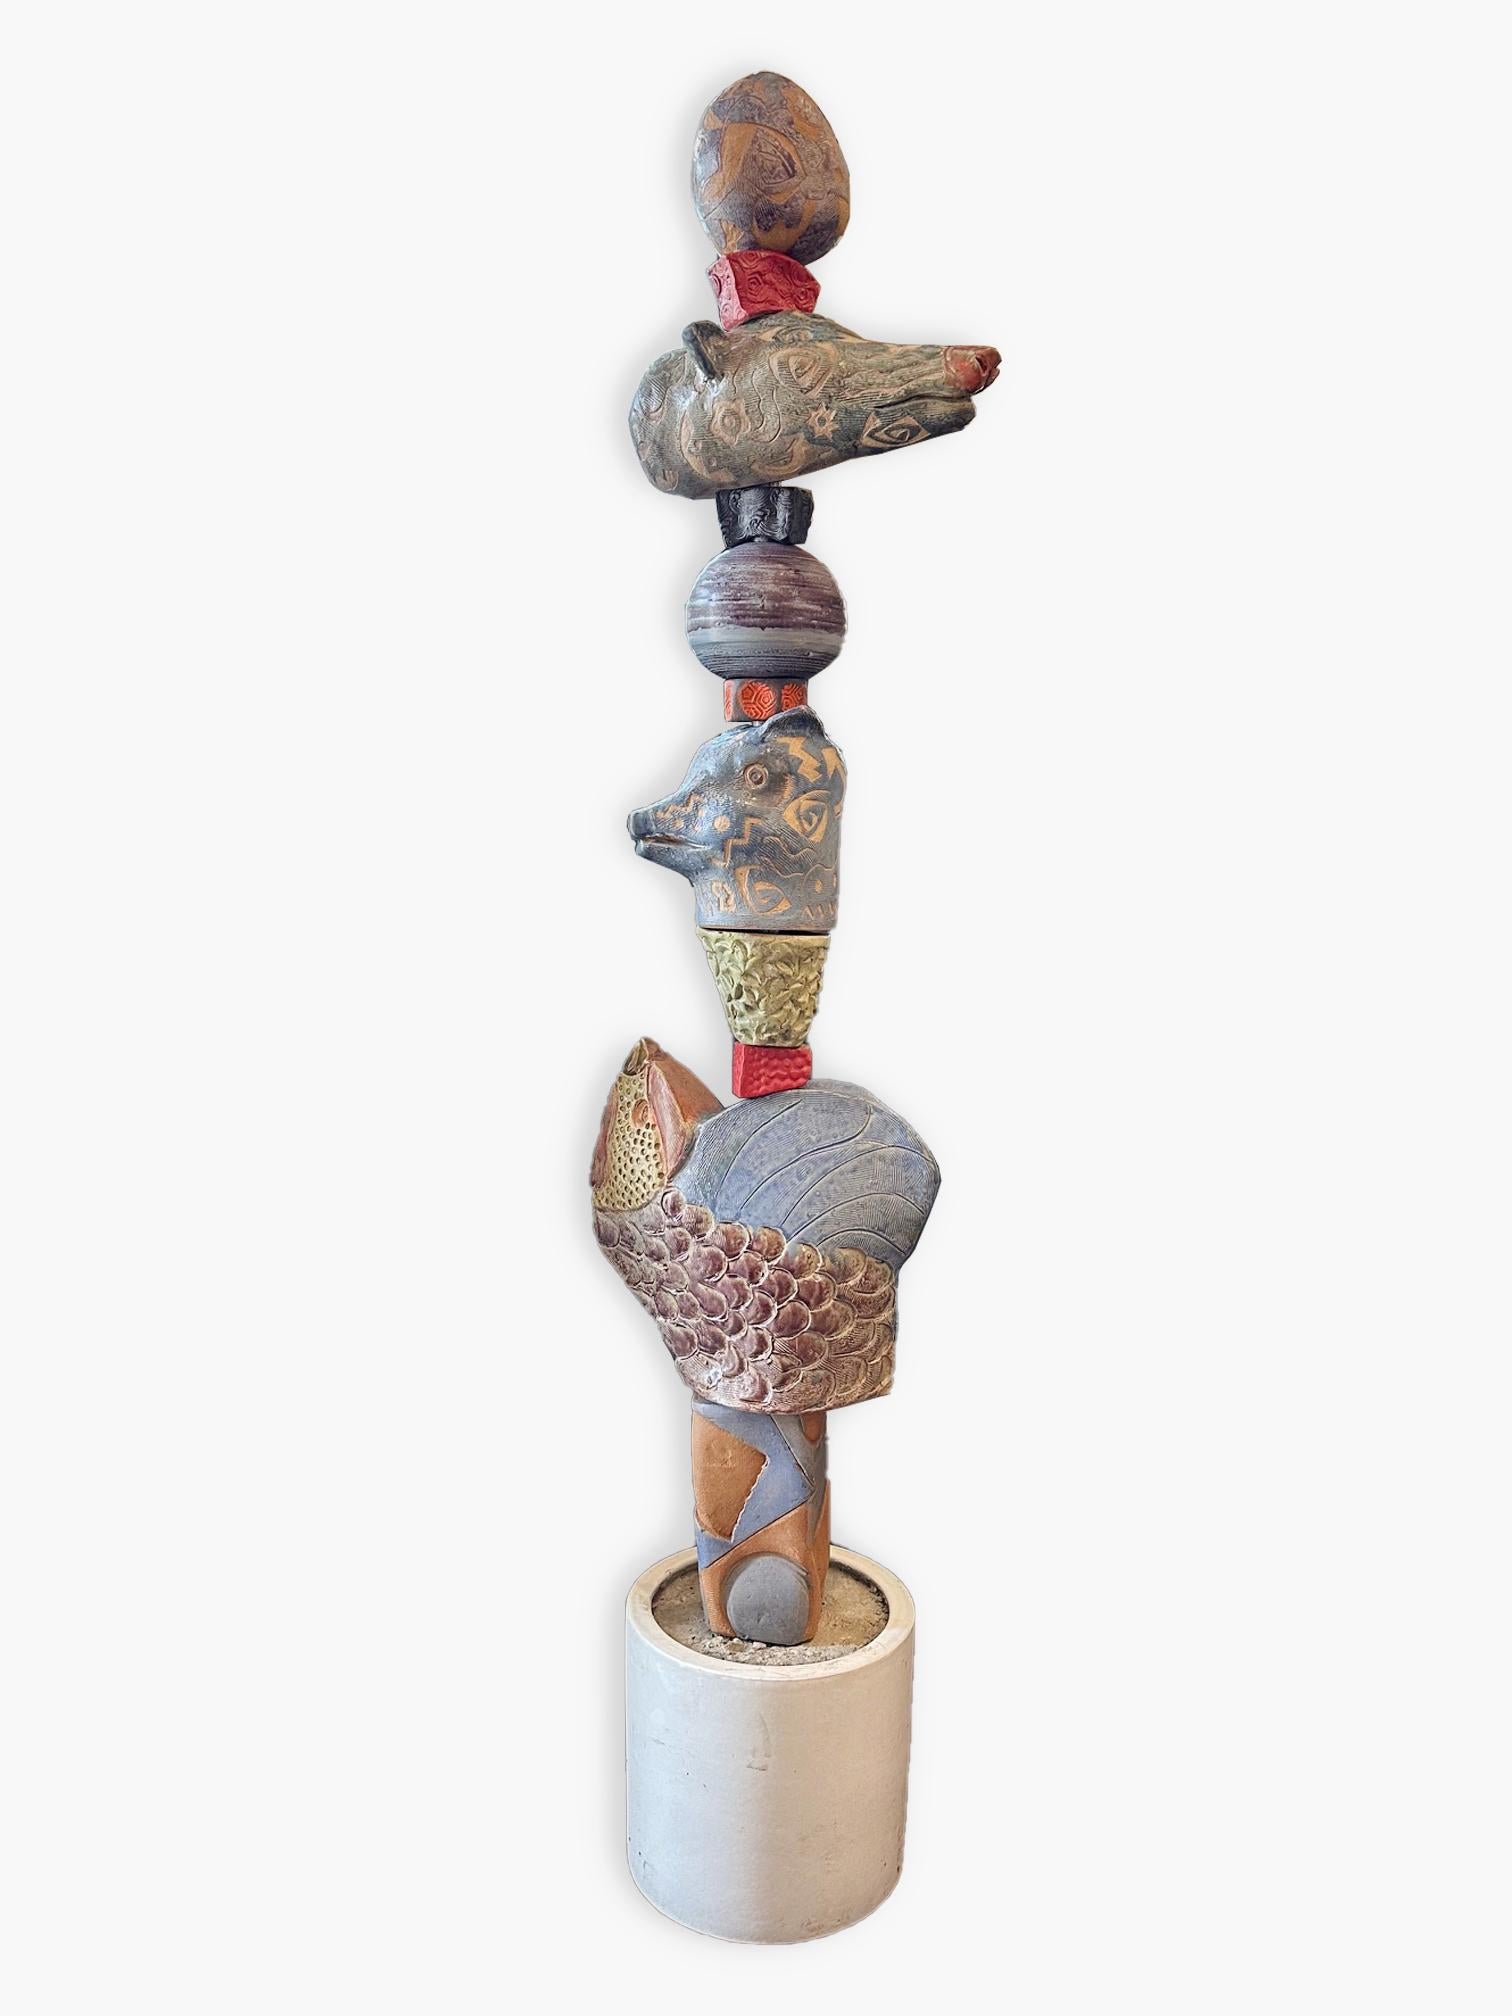 Medium Animal Totem - Glazed Ceramic Sculpture For Outdoor Garden or Indoors - Art by Marc Zimmerman